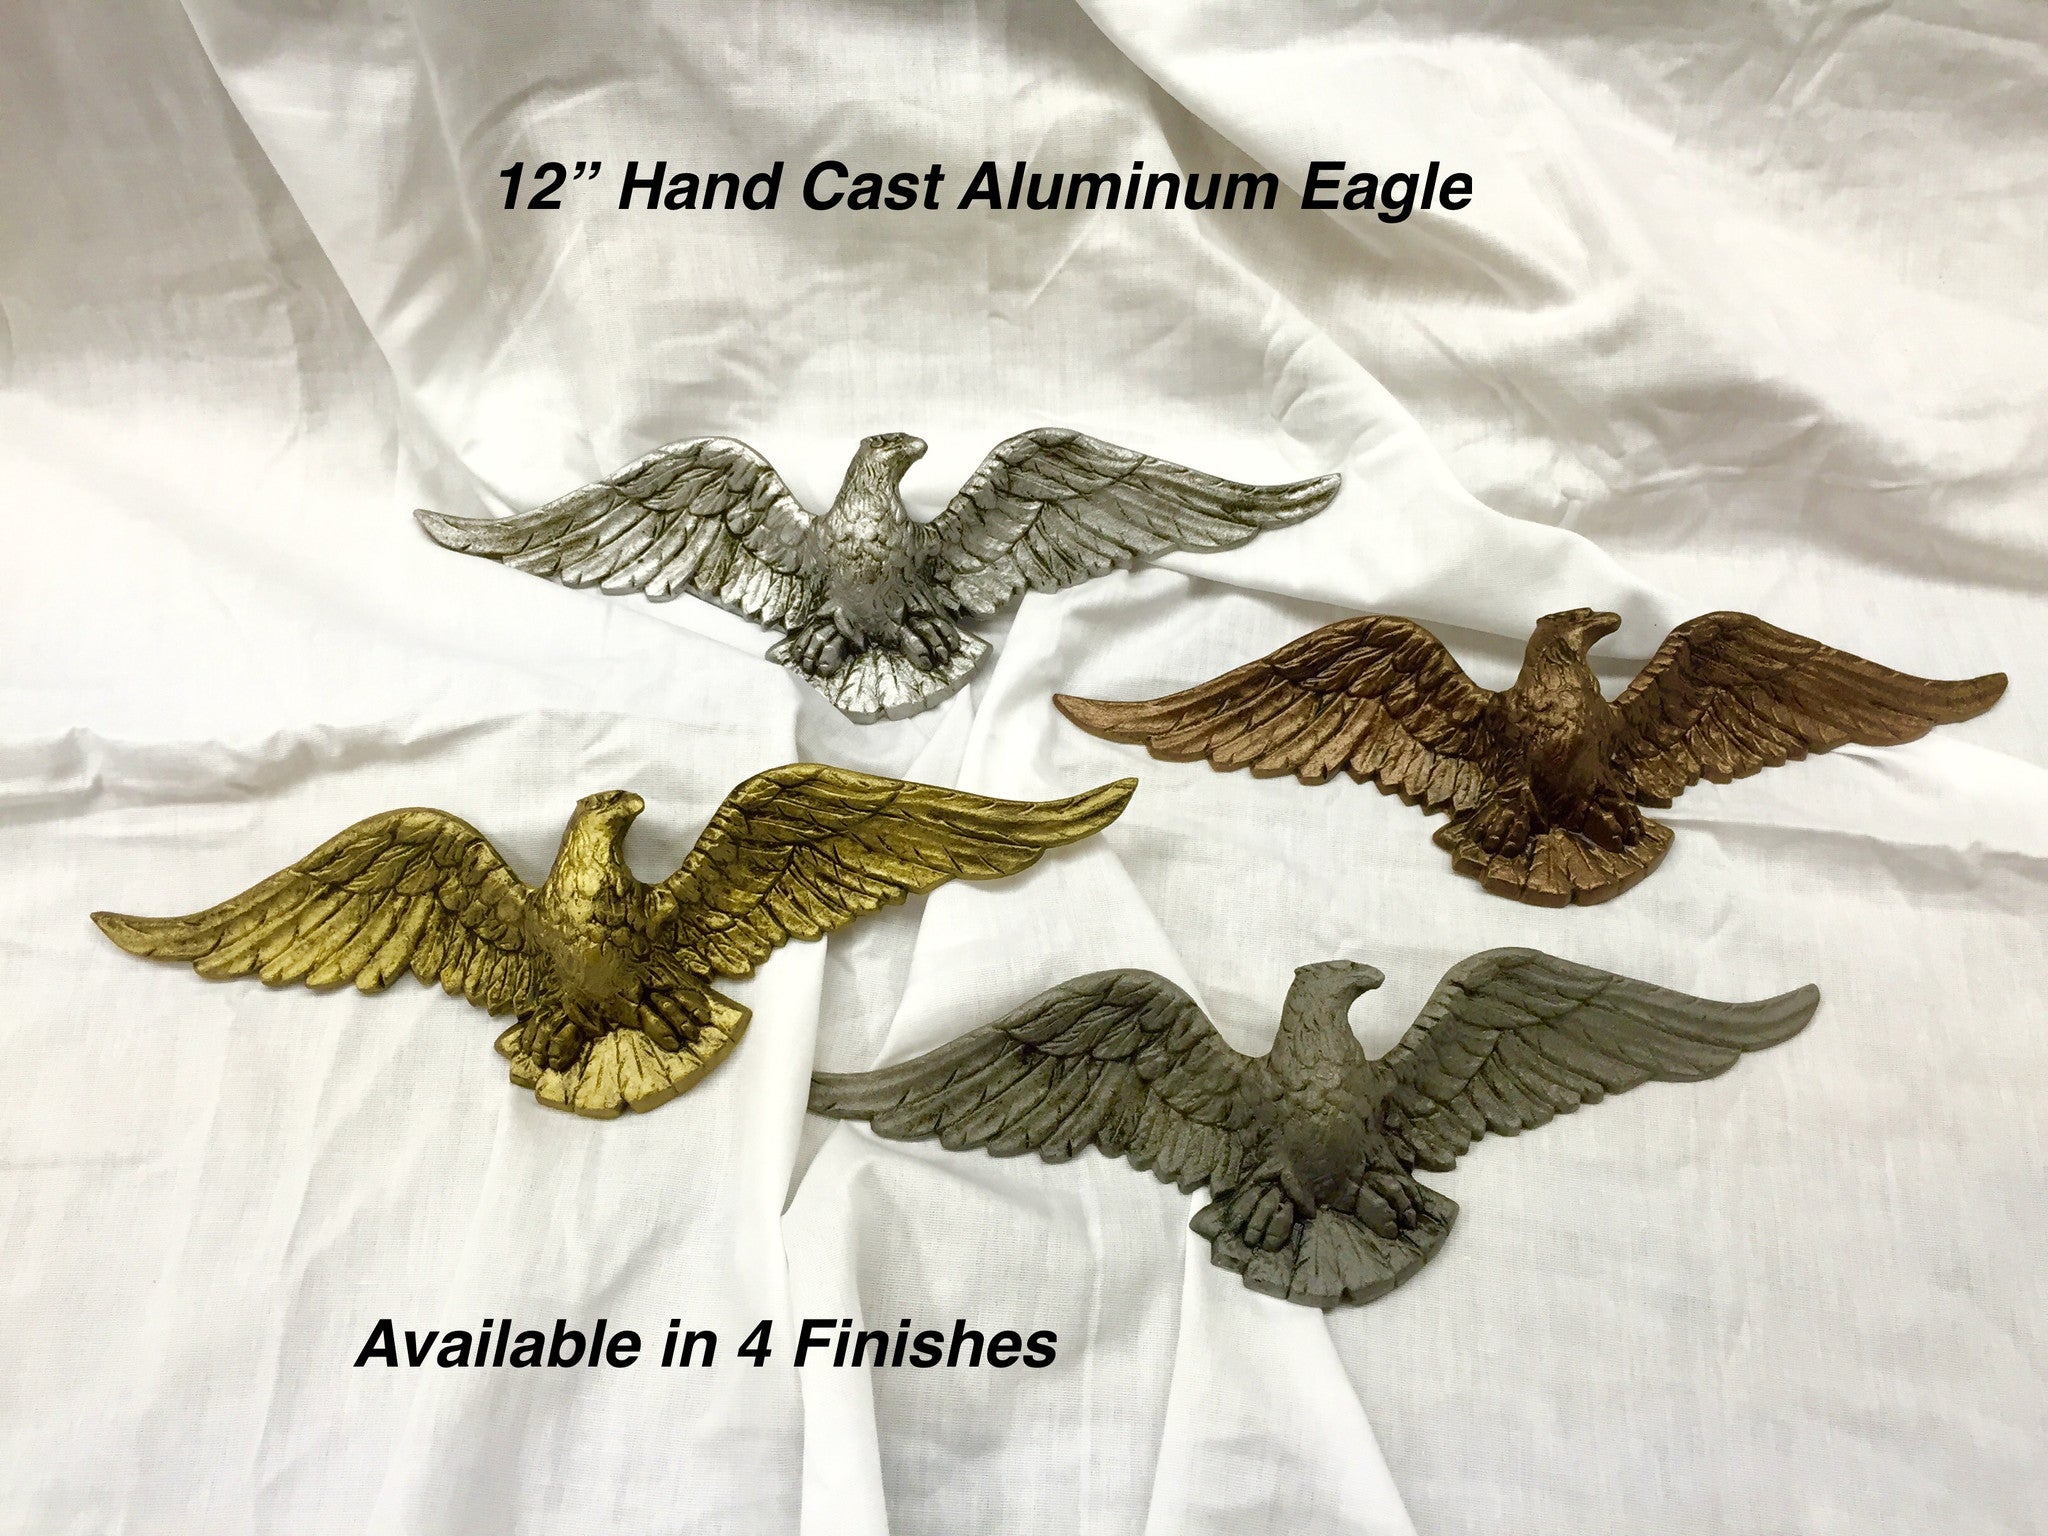 Eagle Claw 374A-12 Classic Treble, Bronze (374AH-12)